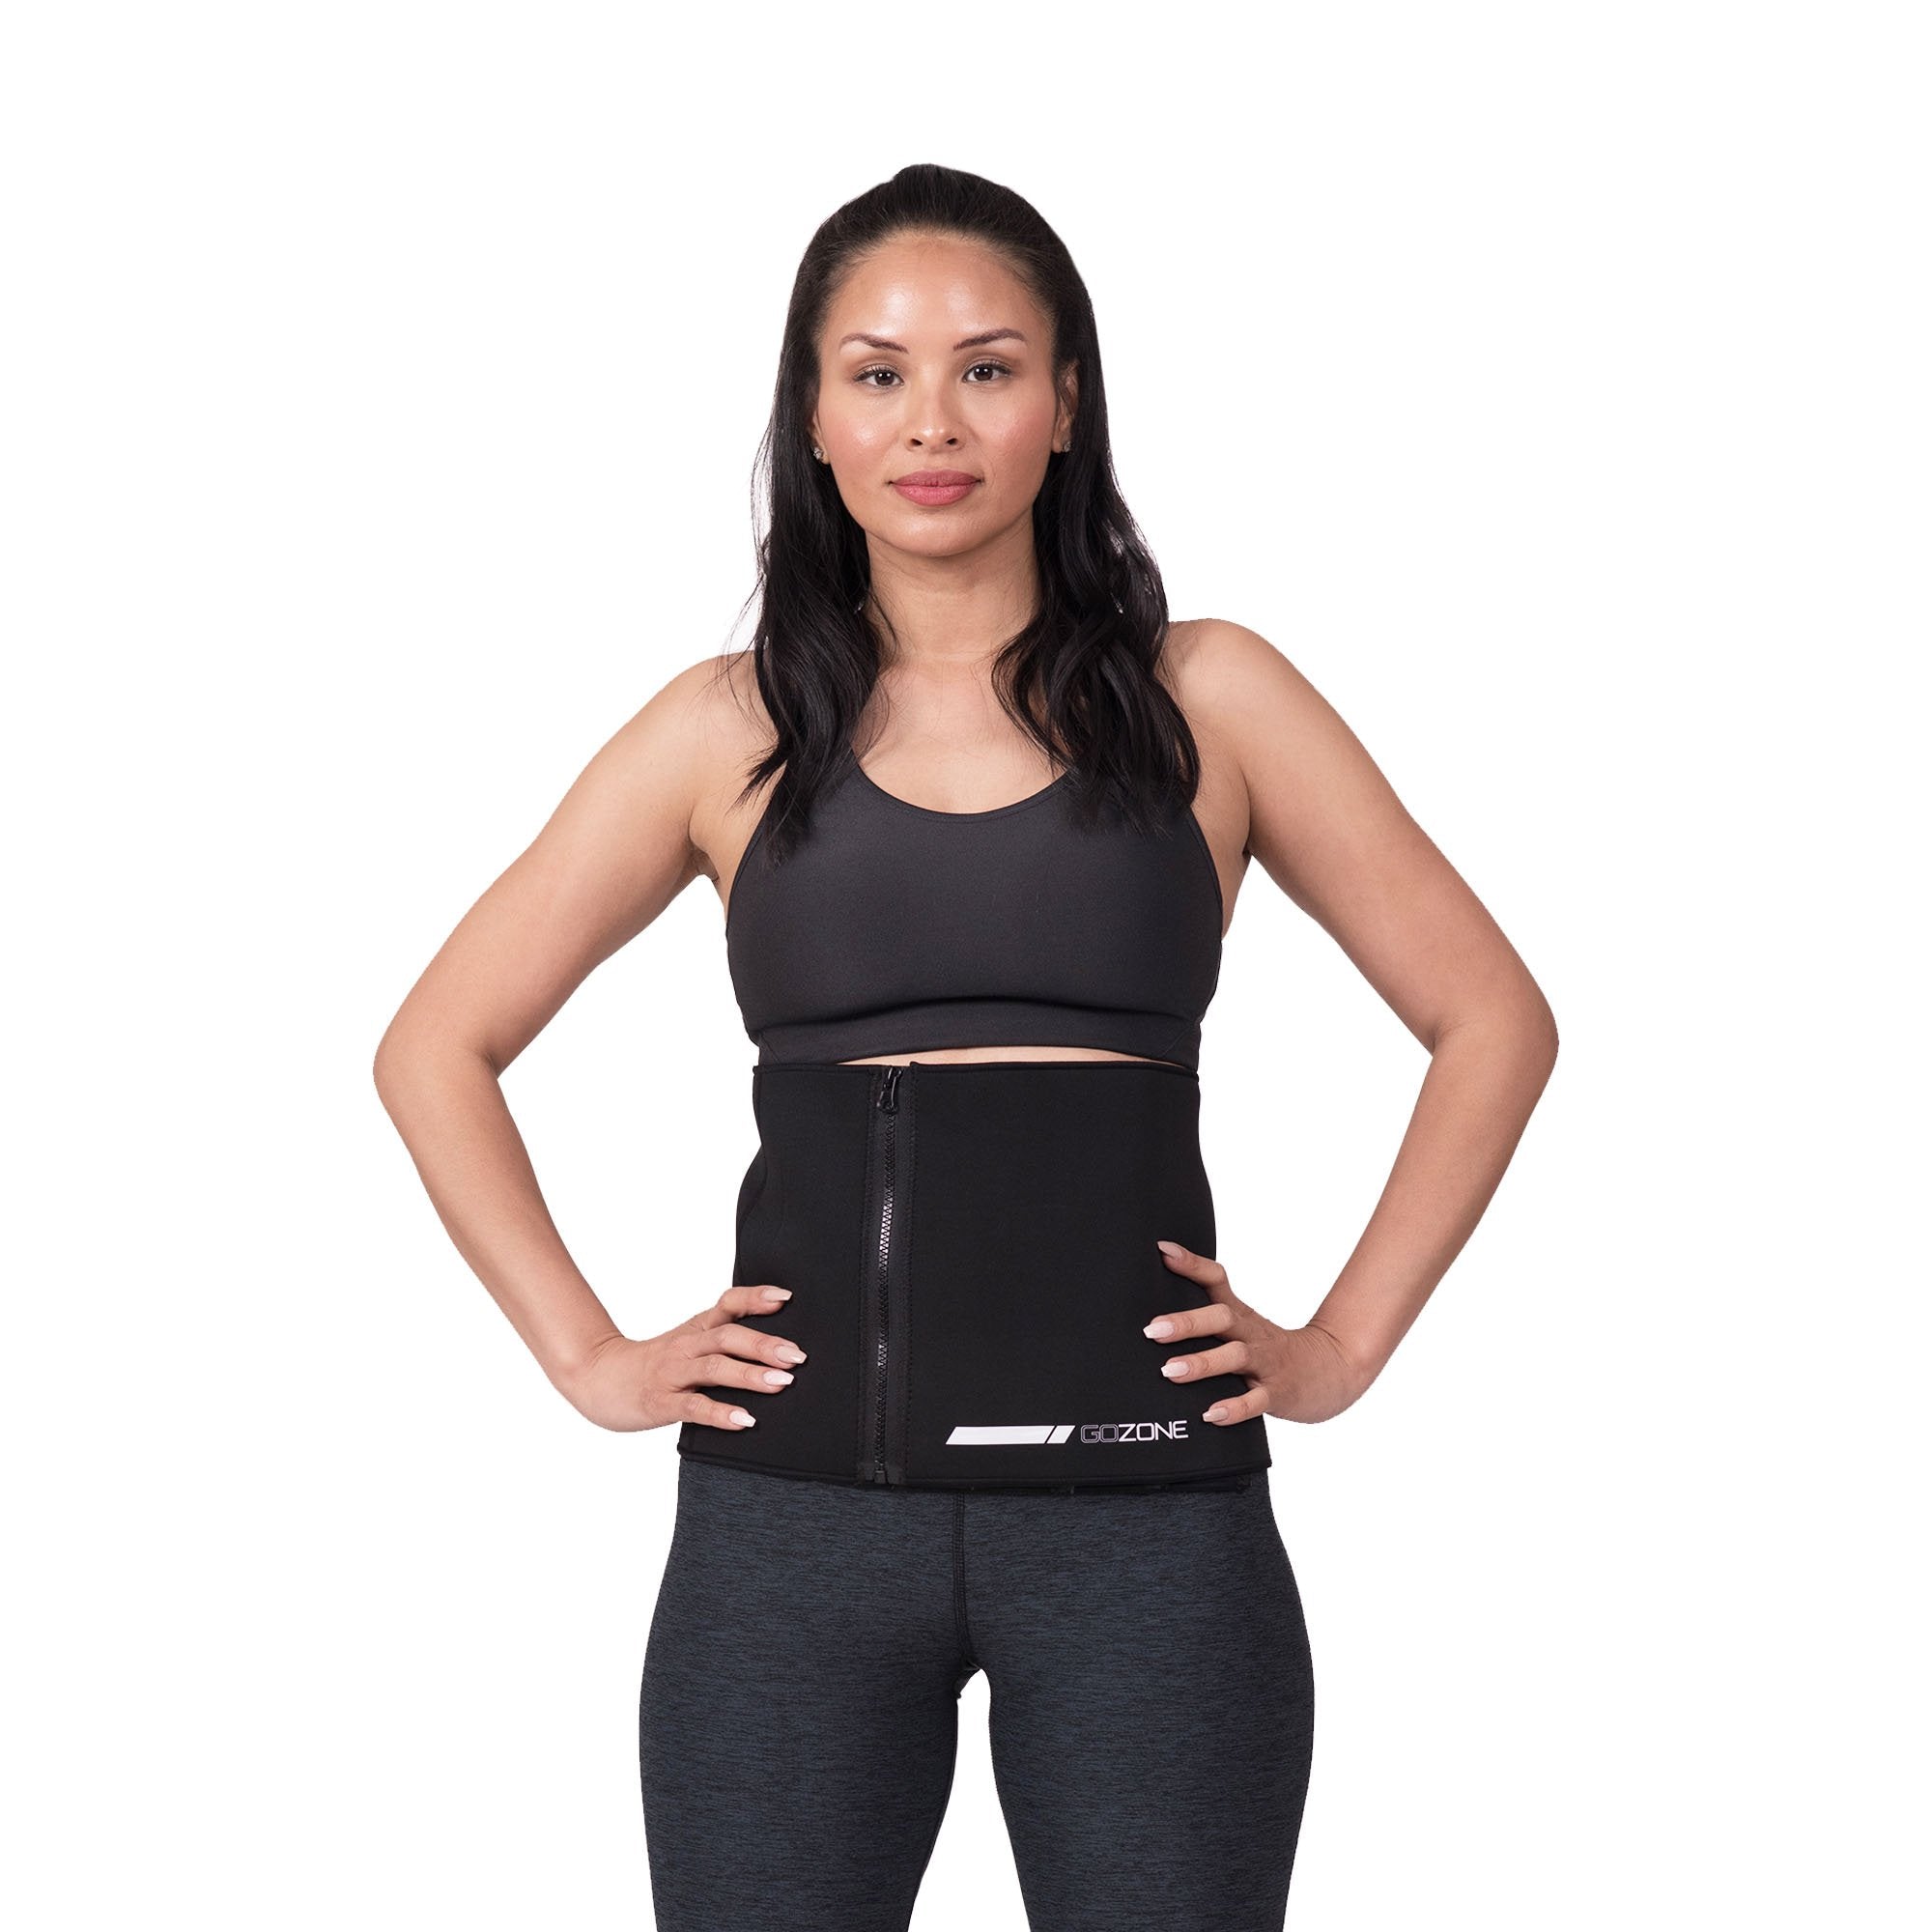 VASLANDA Waist Trimmer for Women & Men Sweat Waist Trainer Slimming Belt,  Stomach Wraps for Weight Loss, Neoprene Ab Belt Low Back and Lumbar Support  